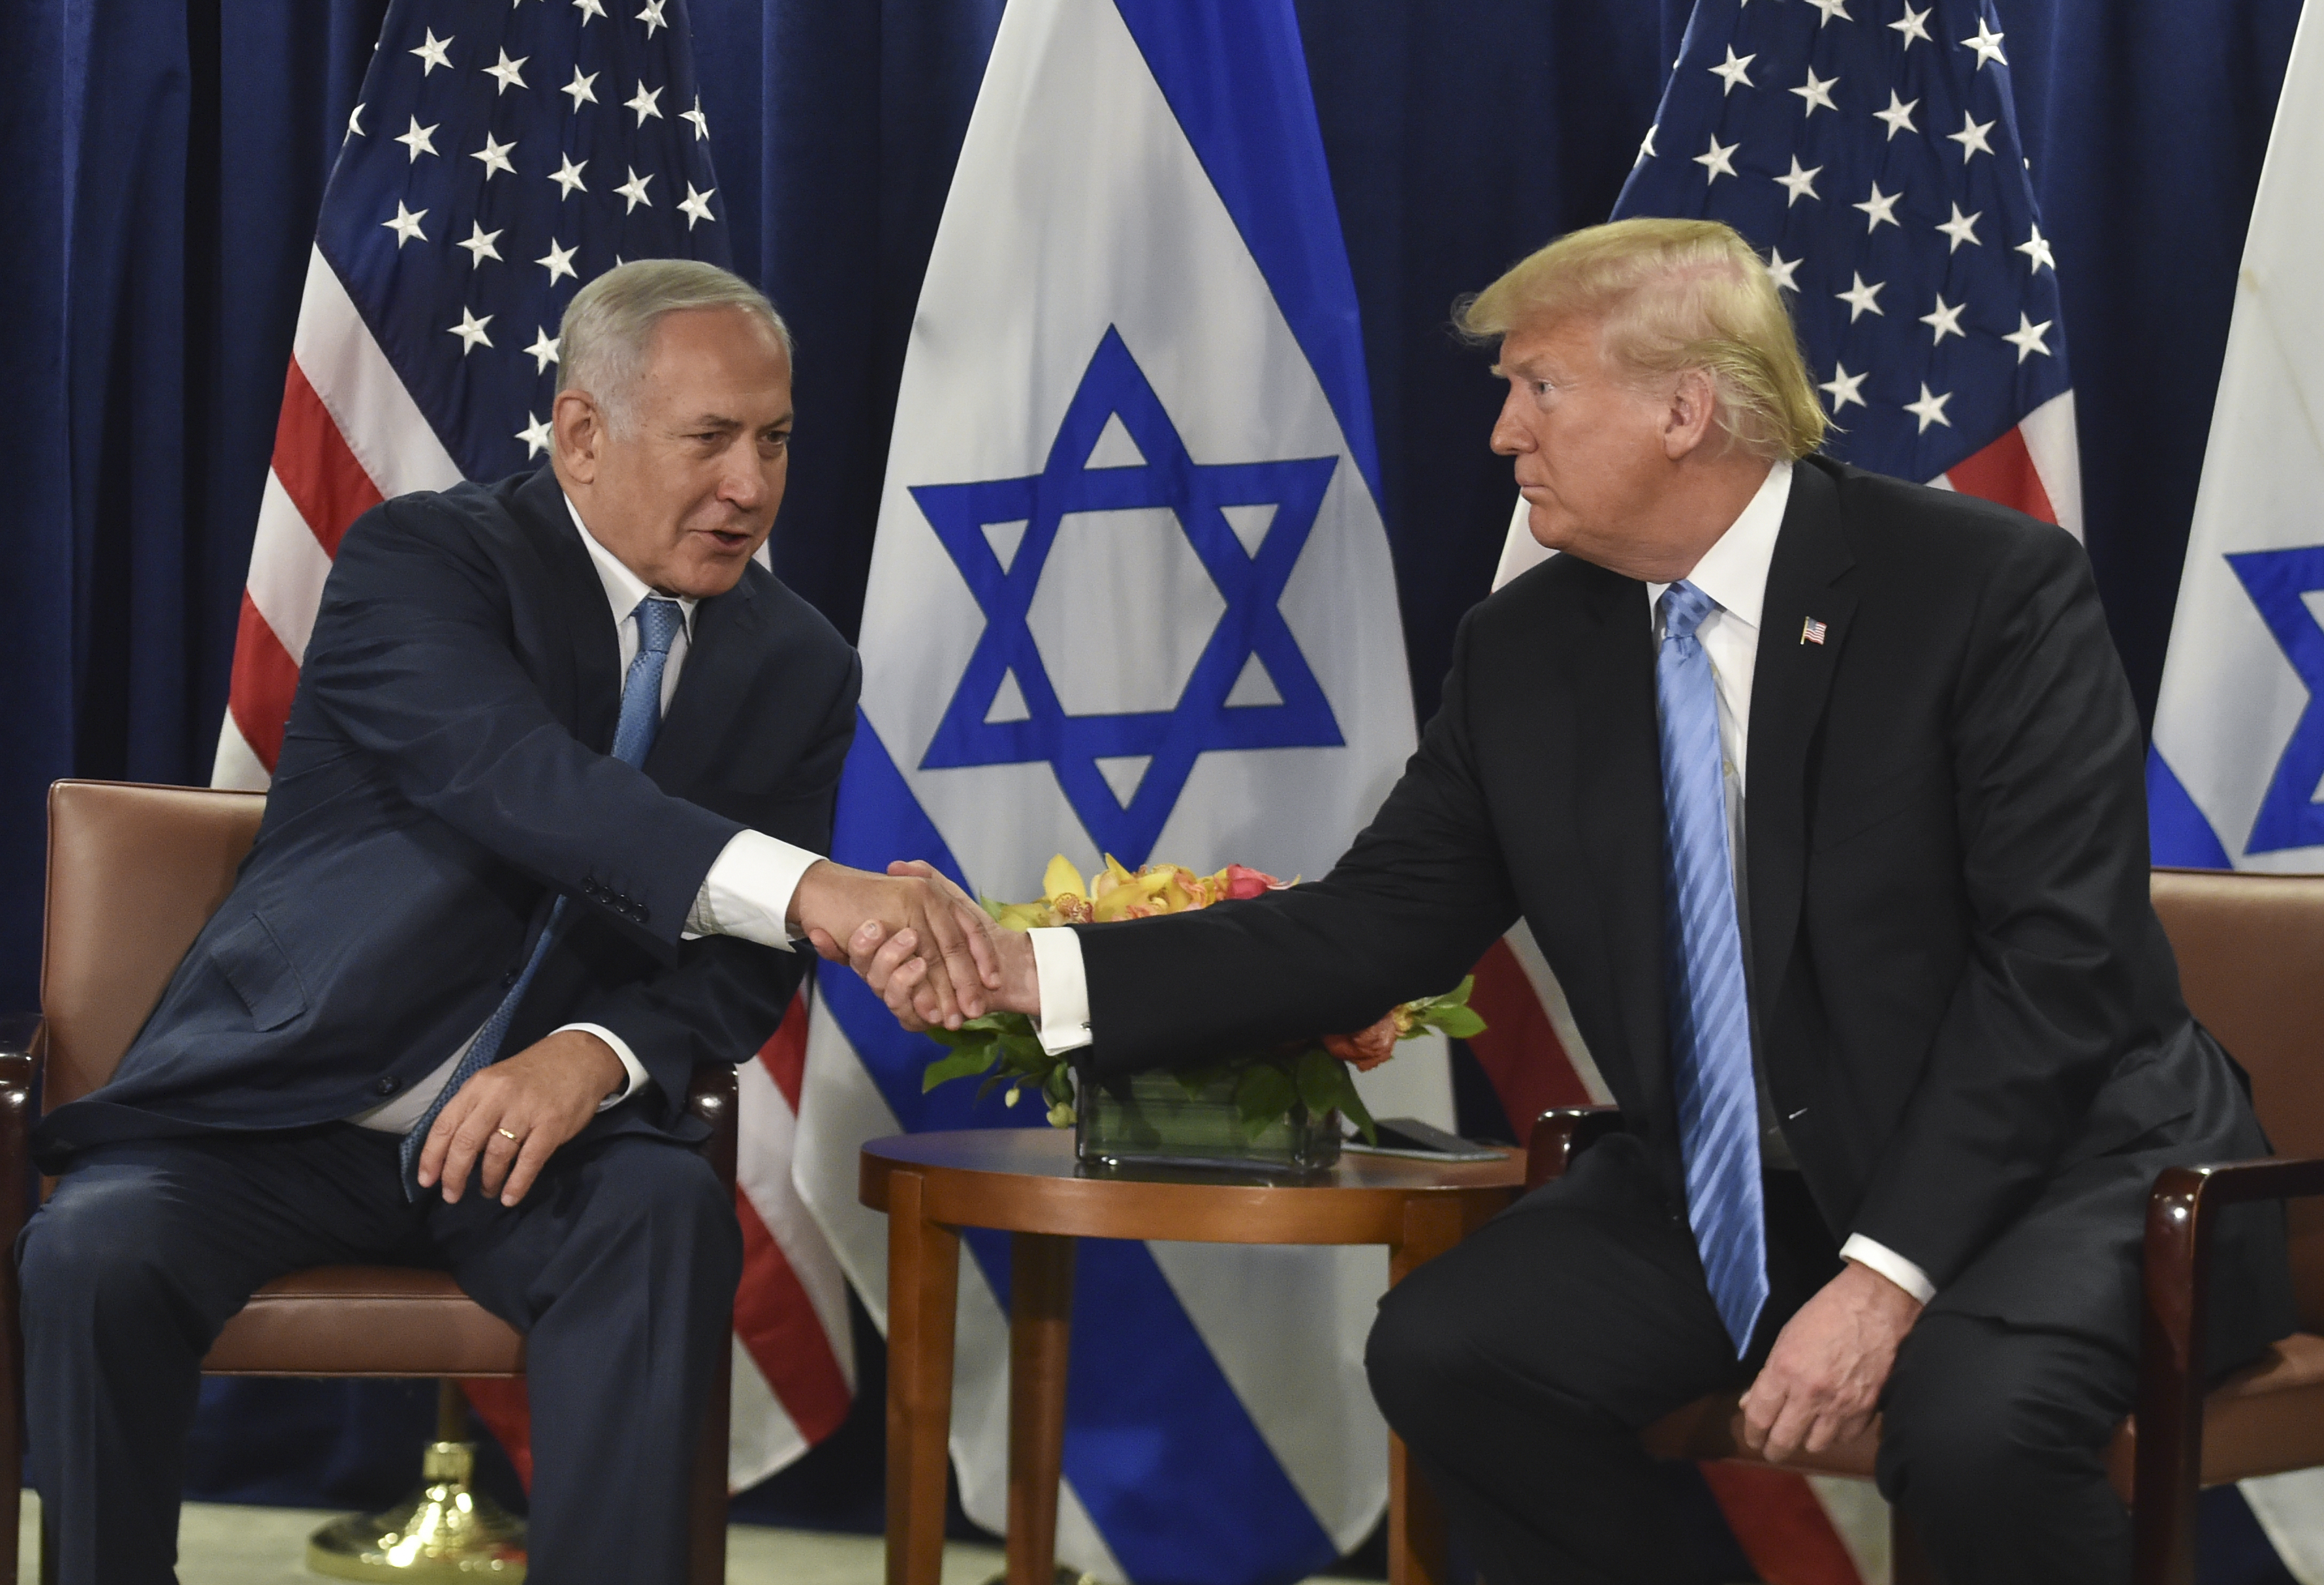 Trump: Bibi sosem akart békét